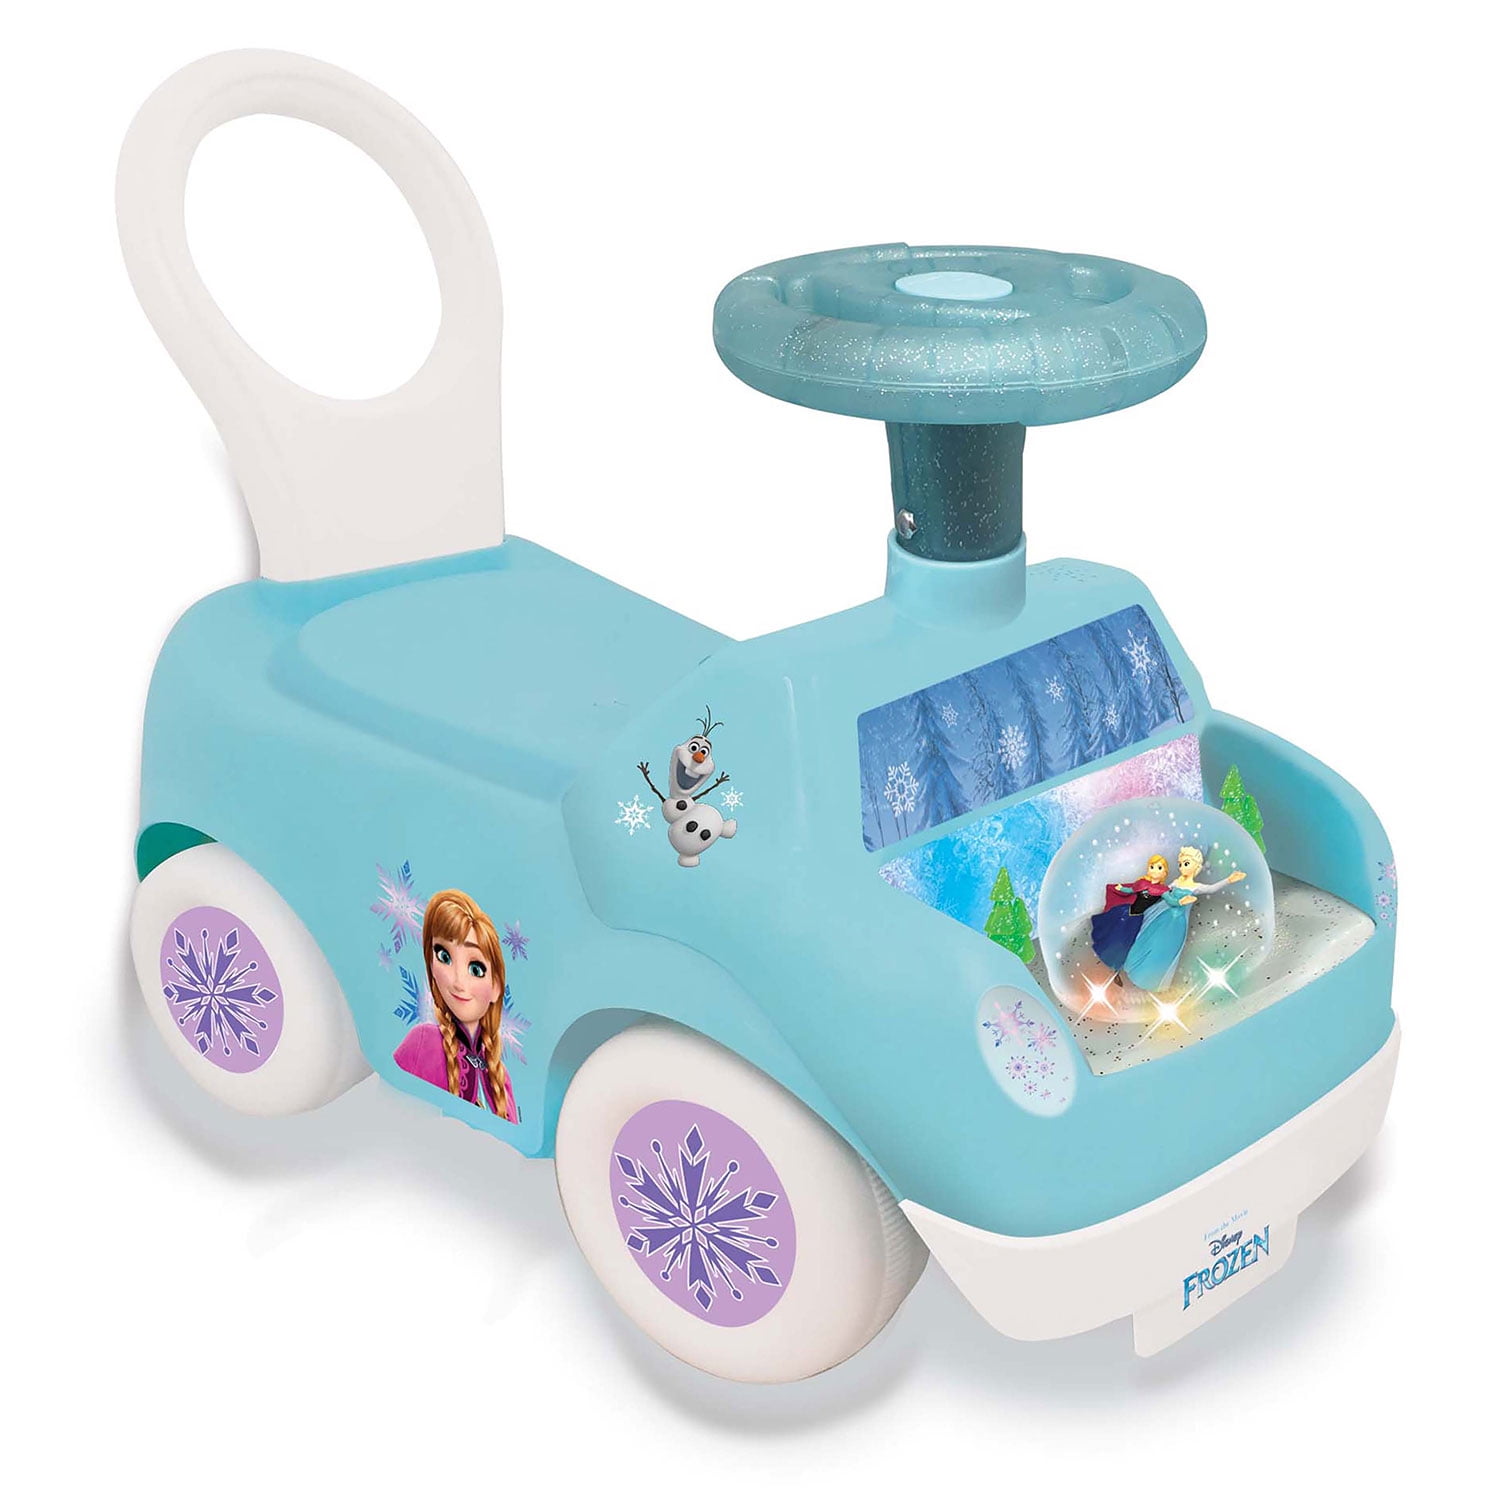 Kiddieland Toys Limited Girls Disney My First Frozen Activity Ride-on 052787 for sale online 